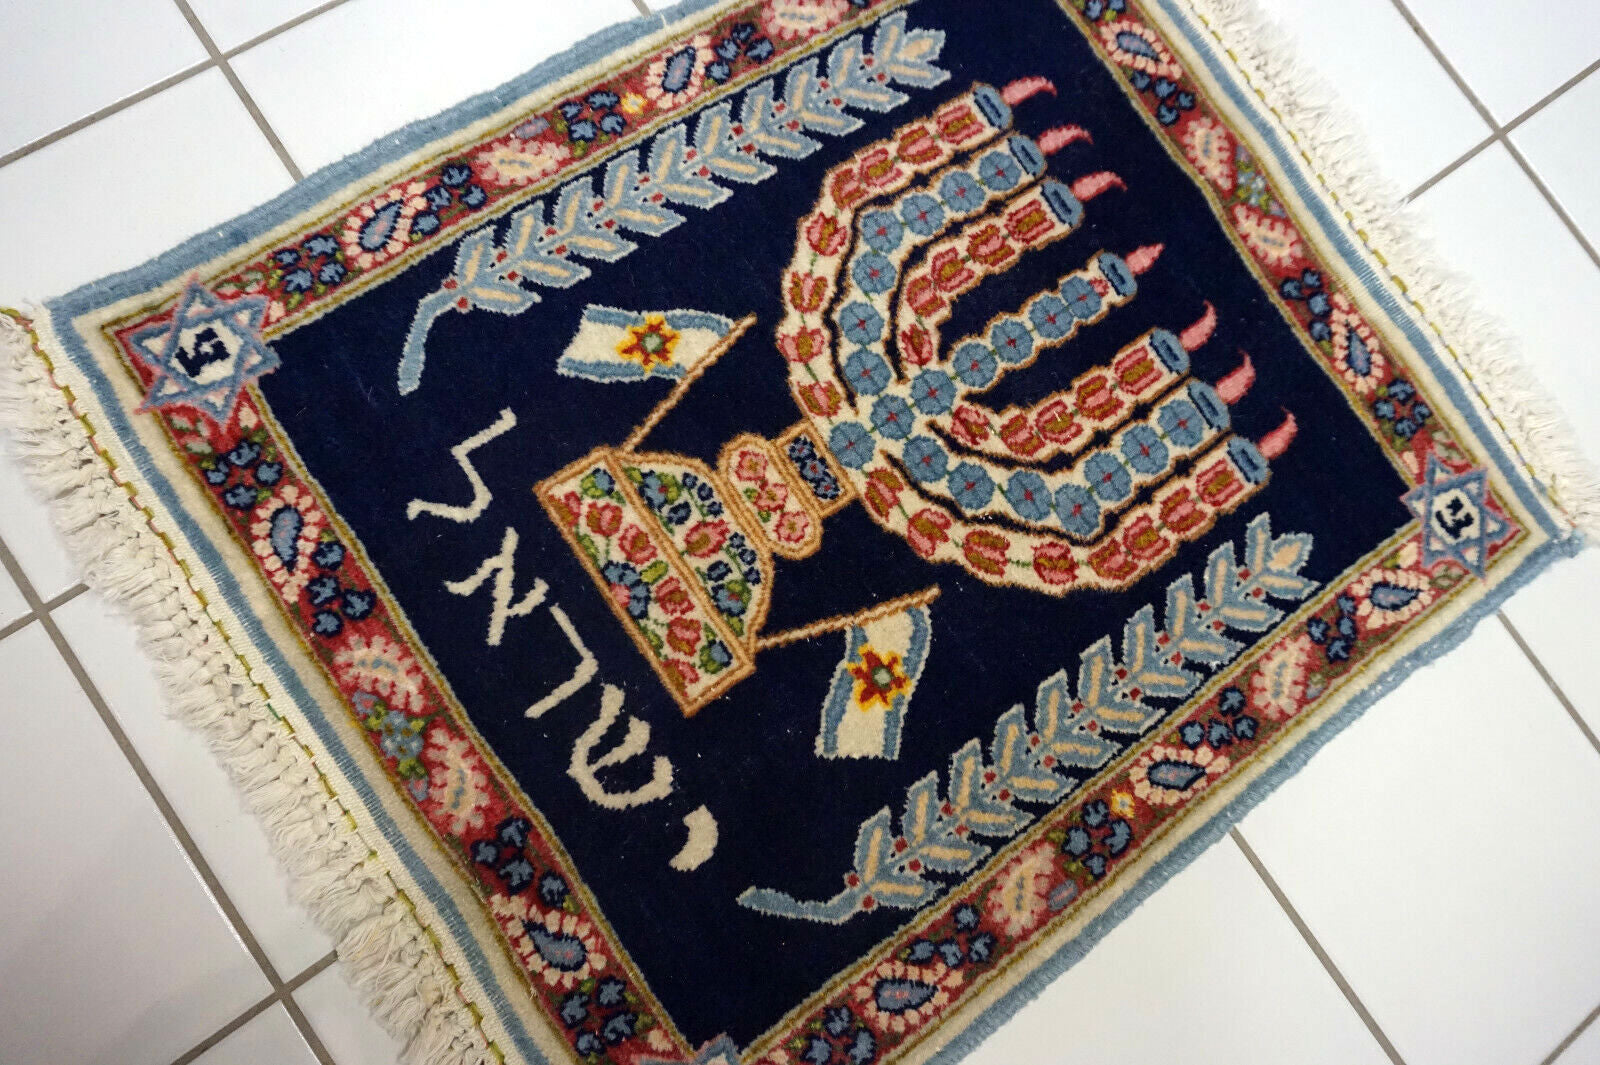 High-Resolution Image of Small Persian Kerman Carpet.